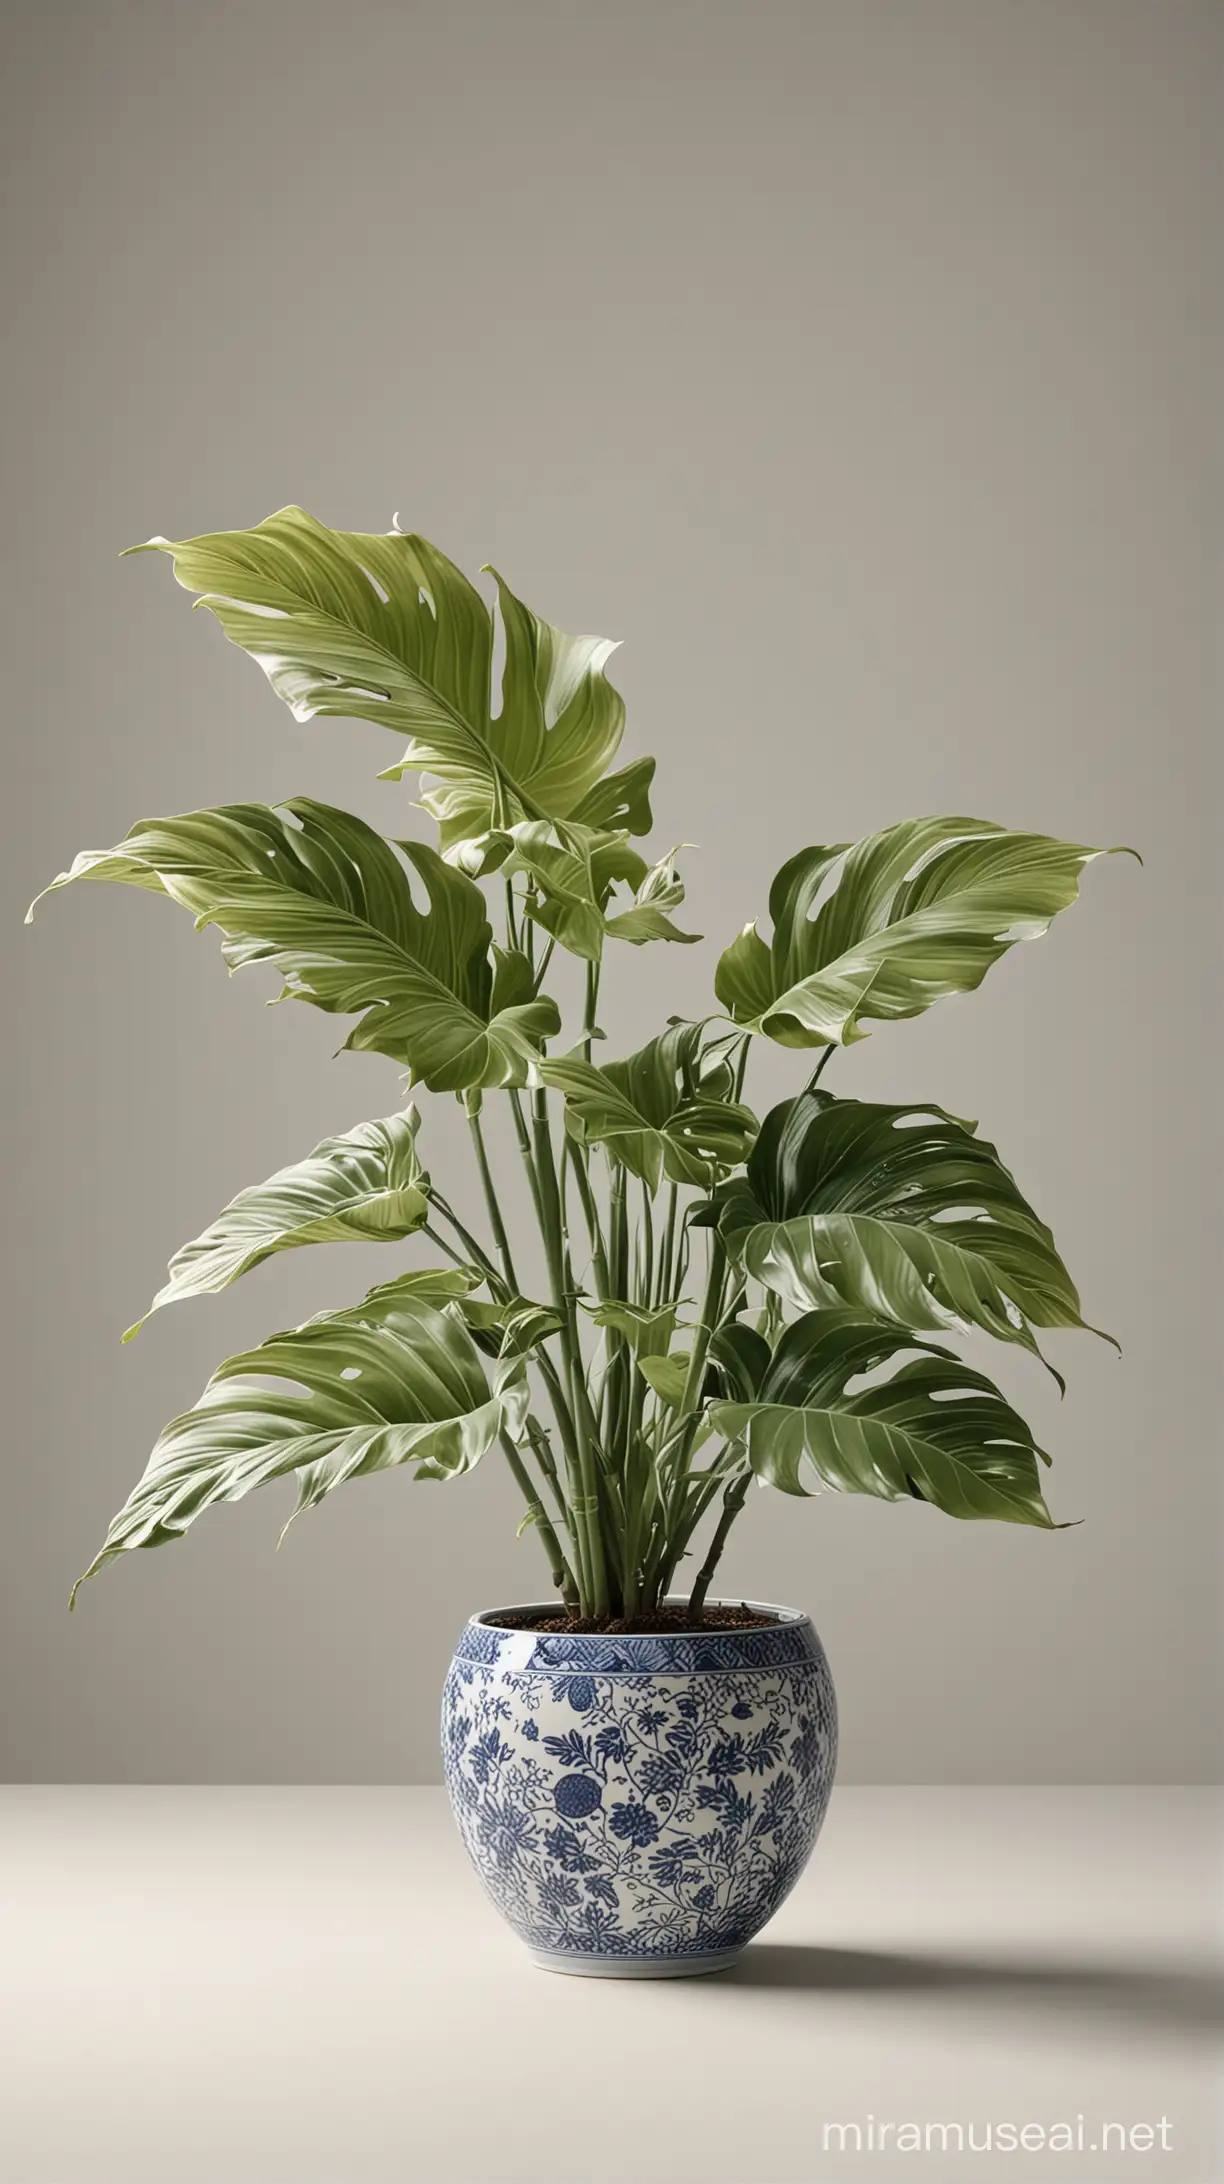 Porcelain Philodendron Birkin Exquisite Artistry in a Serene Studio Bonsai Garden